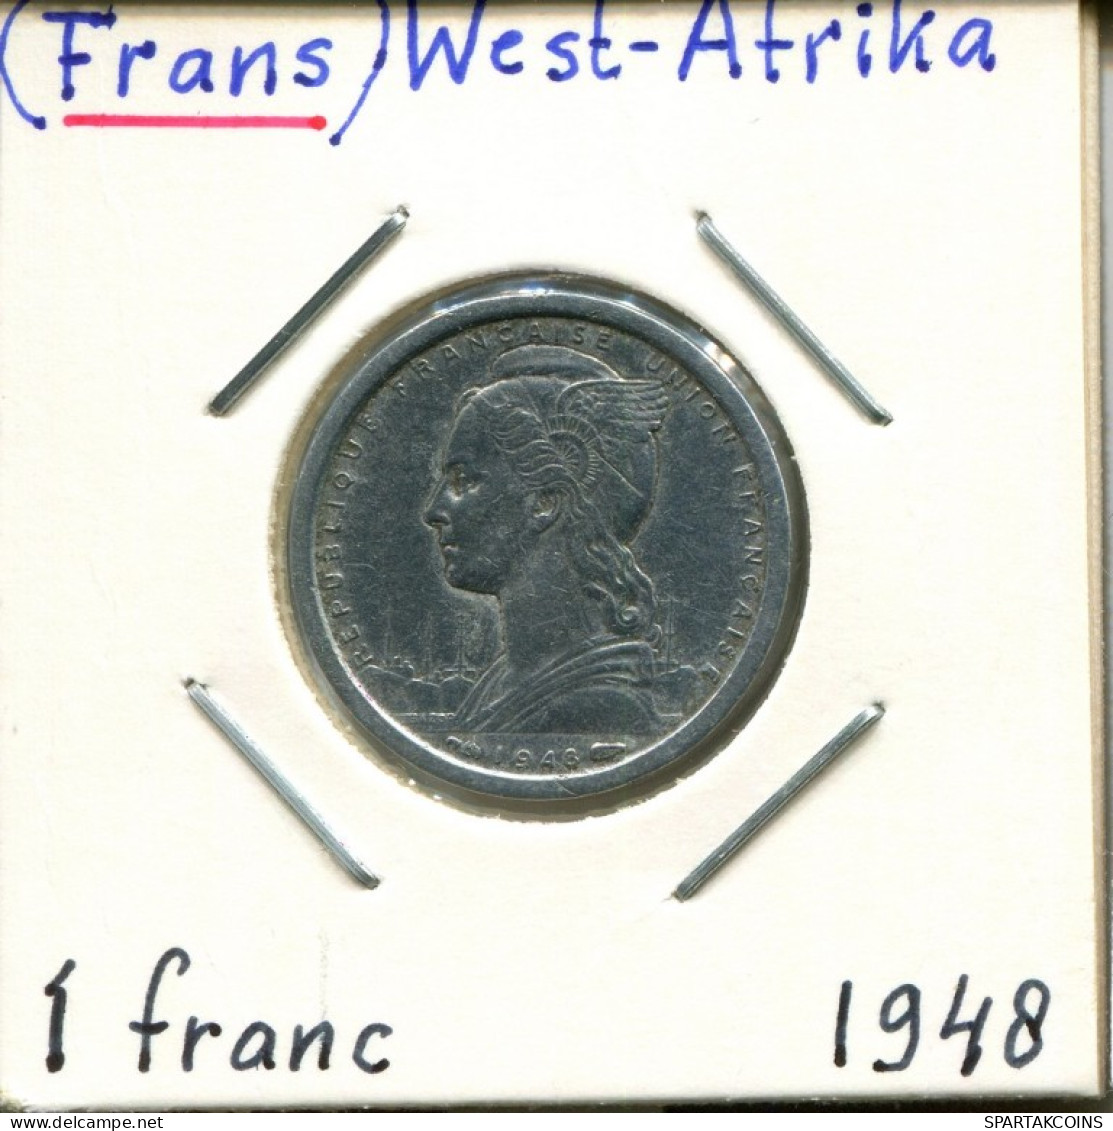 1 FRANC 1948 Französisch WESTERN AFRICAN STATES Koloniale Münze #AM518.D.A - French West Africa